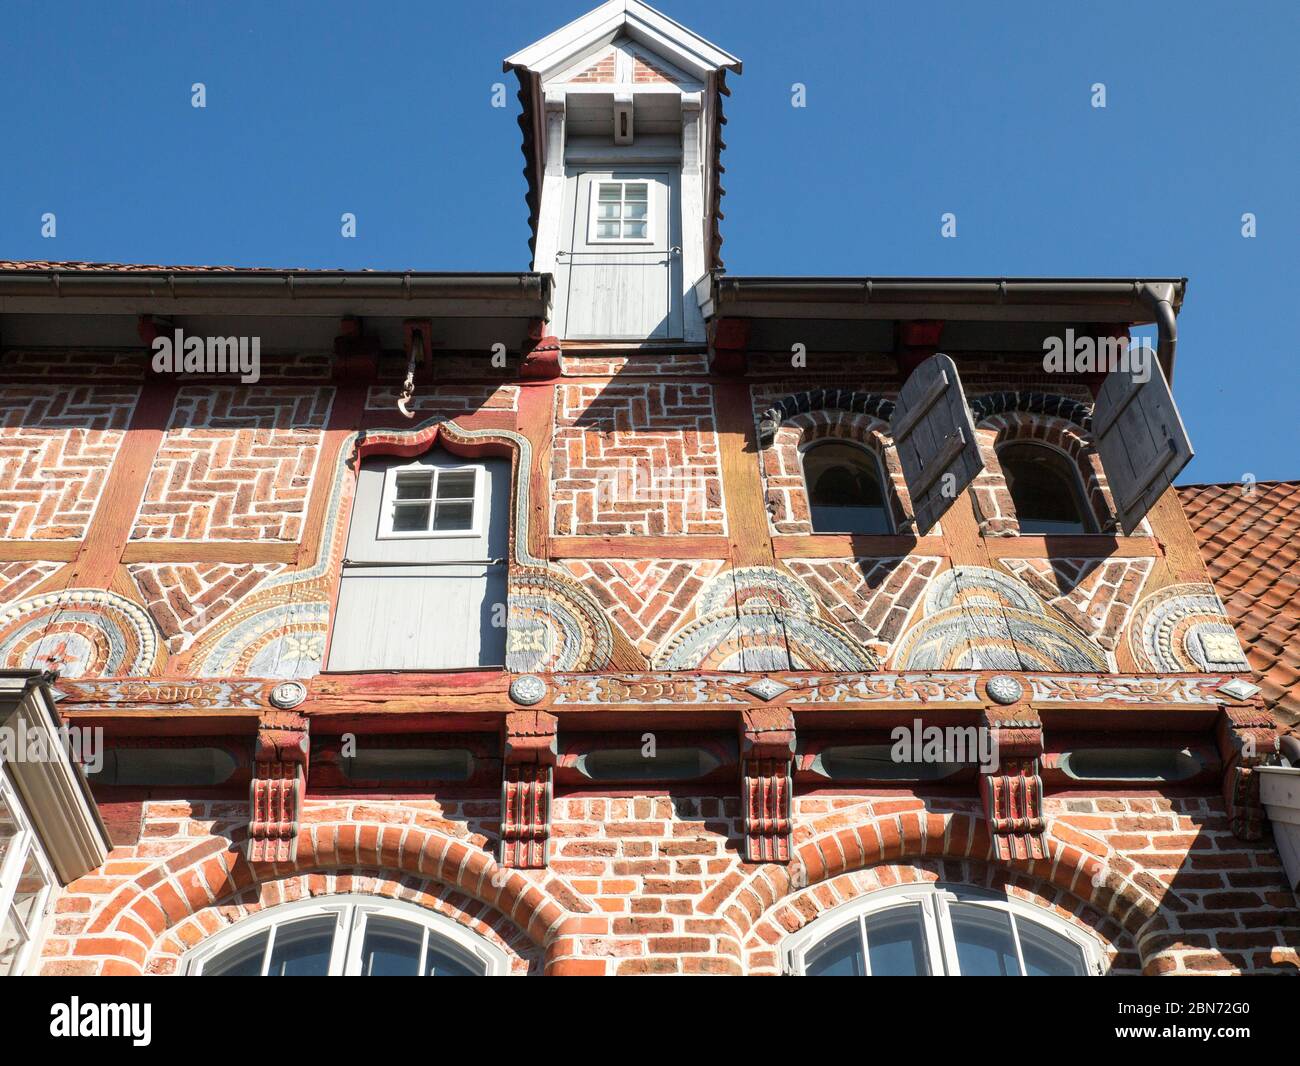 Casa de marco en Obere Ohlingerstrasse en Lueneburg, Alemania. Foto de stock